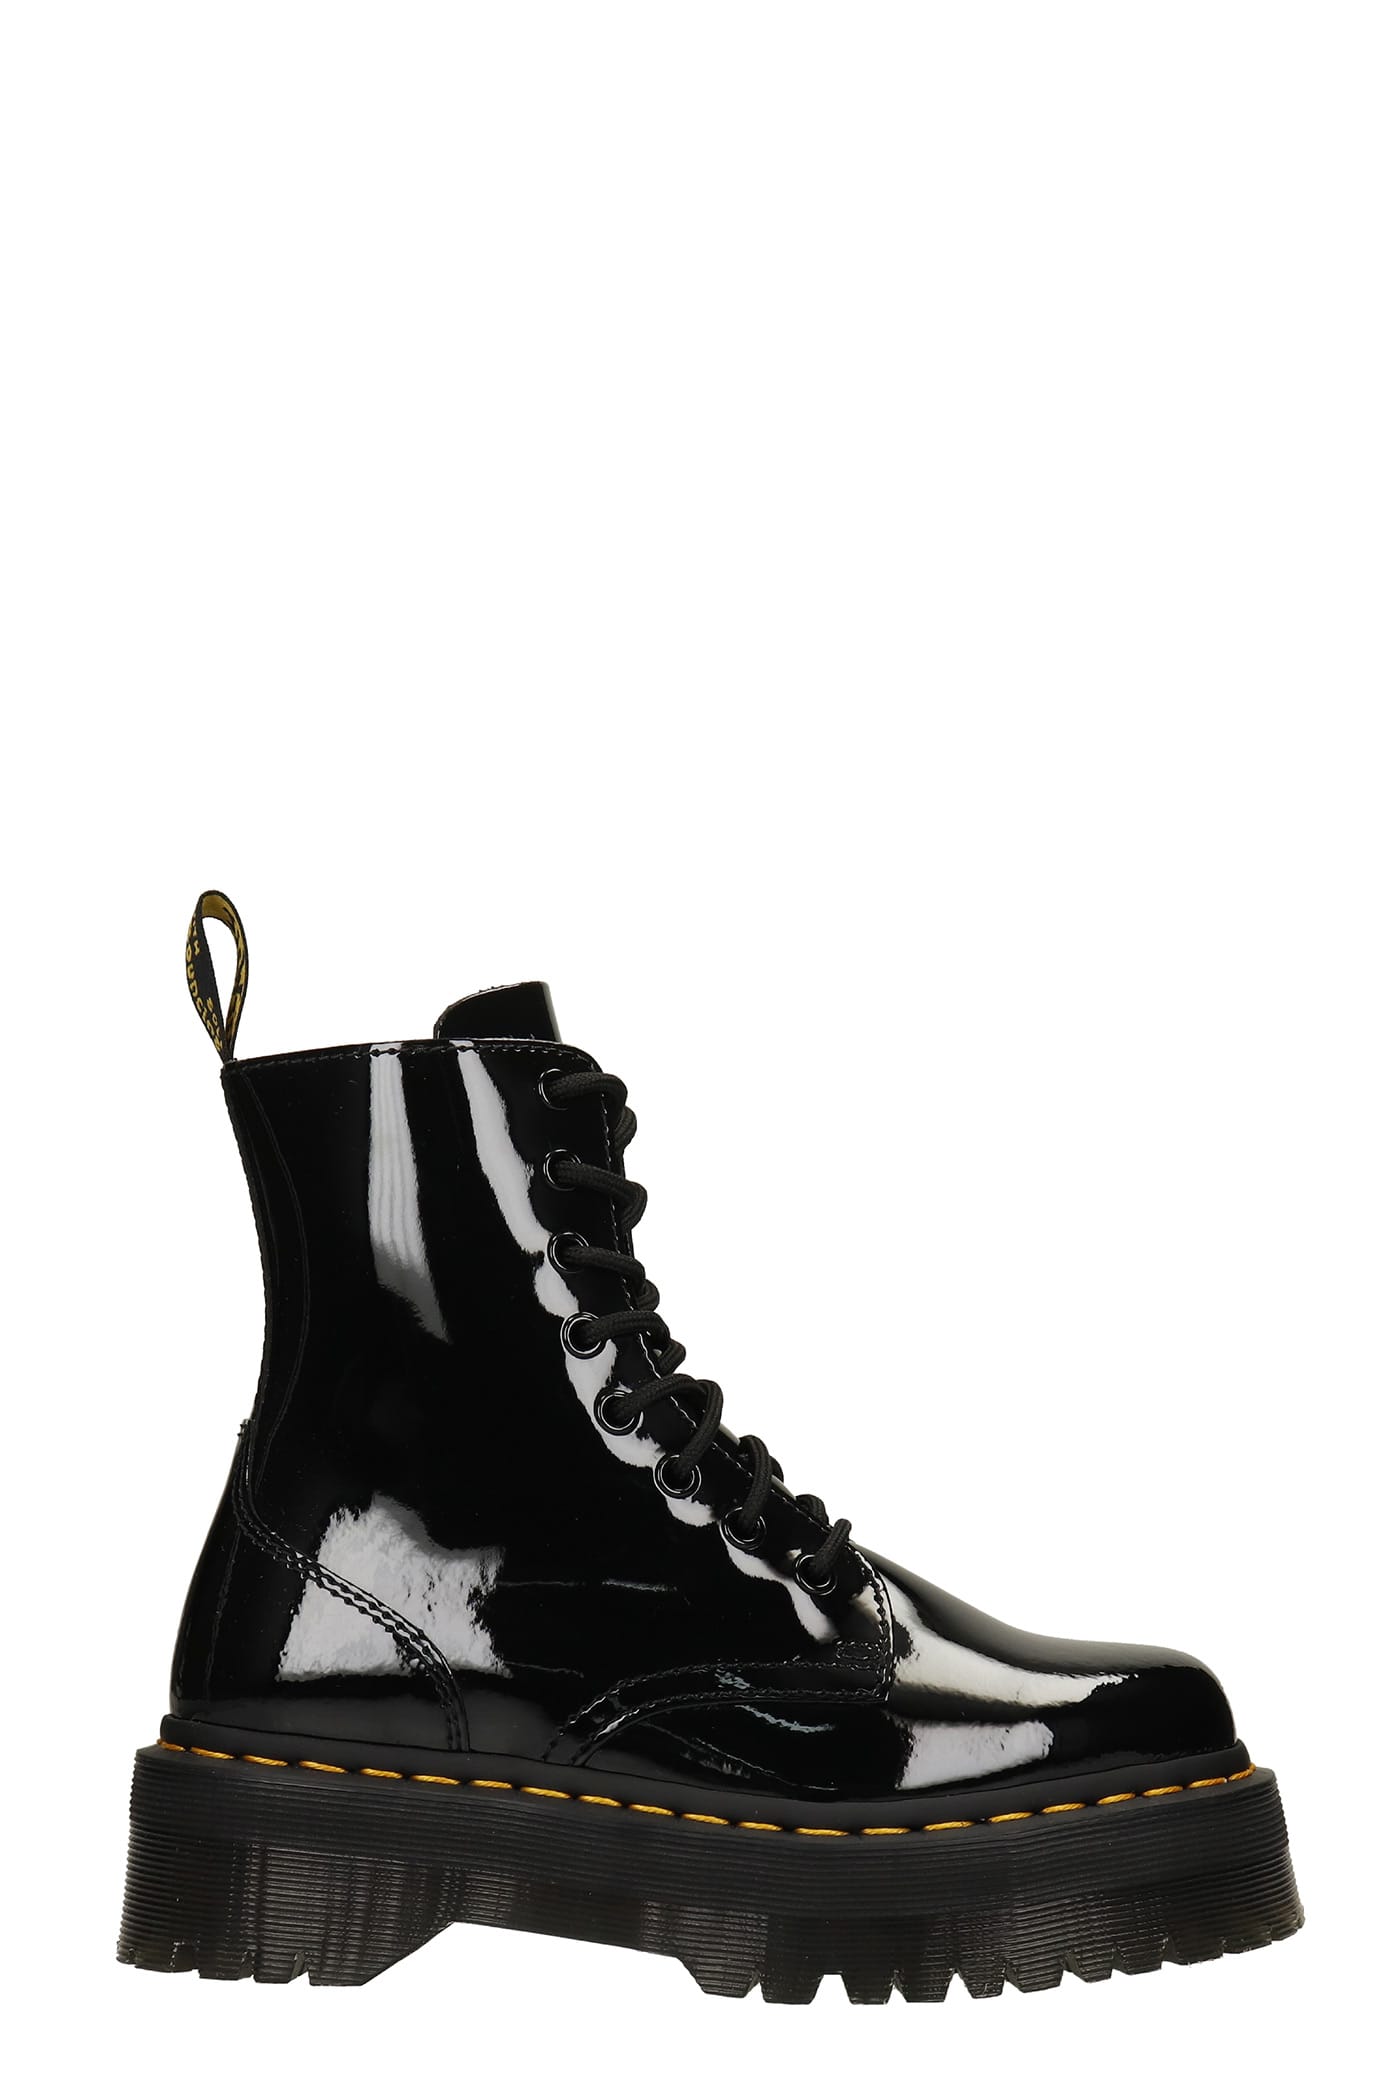 Dr. Martens Jadon Combat Boots In Black Patent Leather